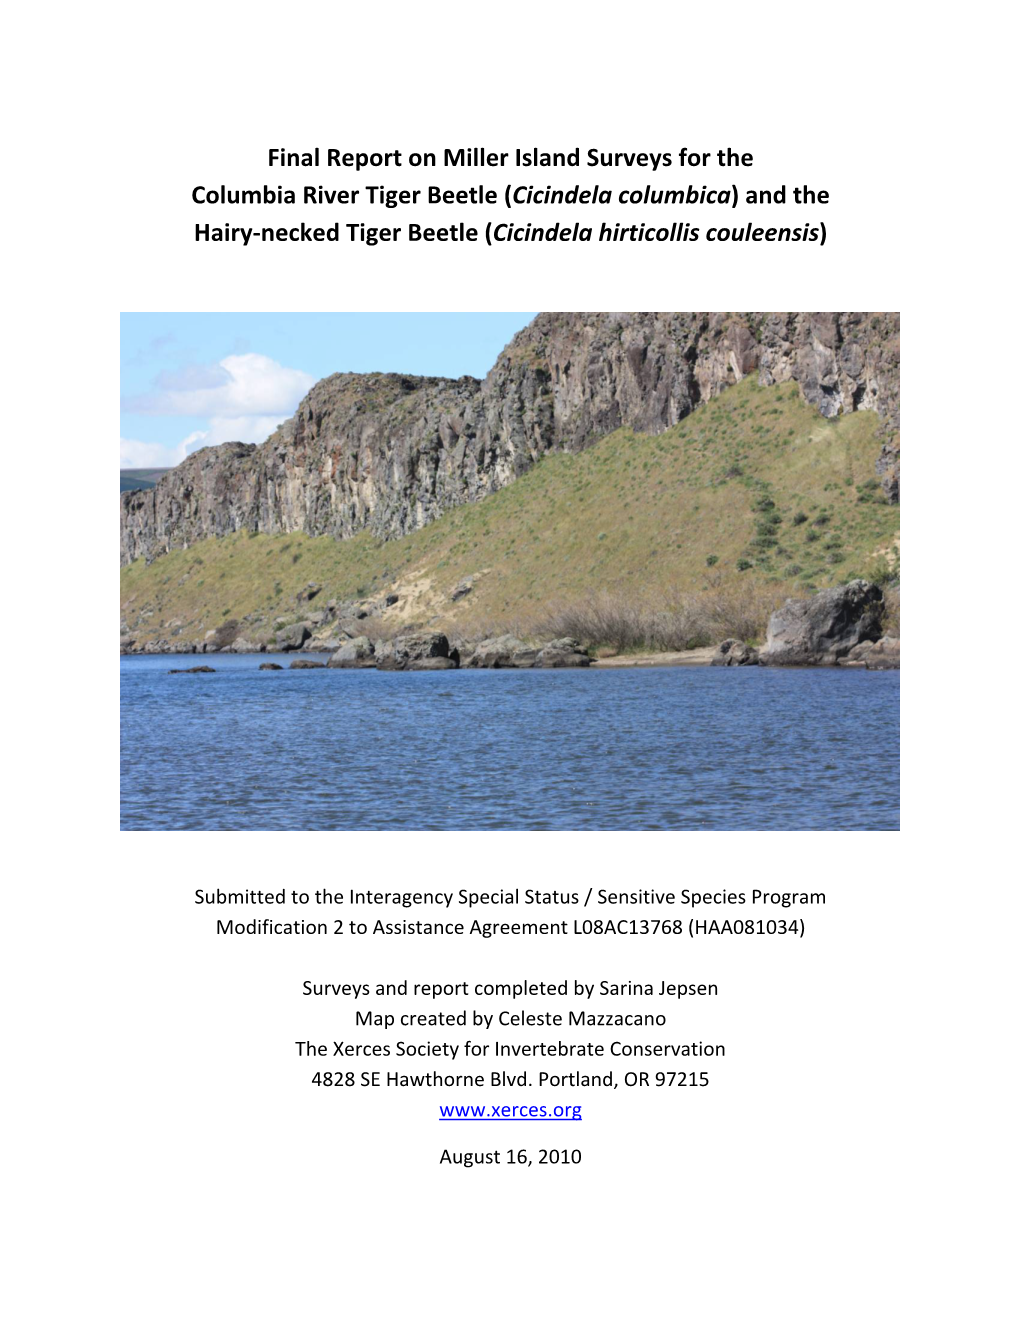 Final Report on Miller Island Surveys for the Columbia River Tiger Beetle (Cicindela Columbica) and the Hairy‐Necked Tiger Beetle (Cicindela Hirticollis Couleensis)